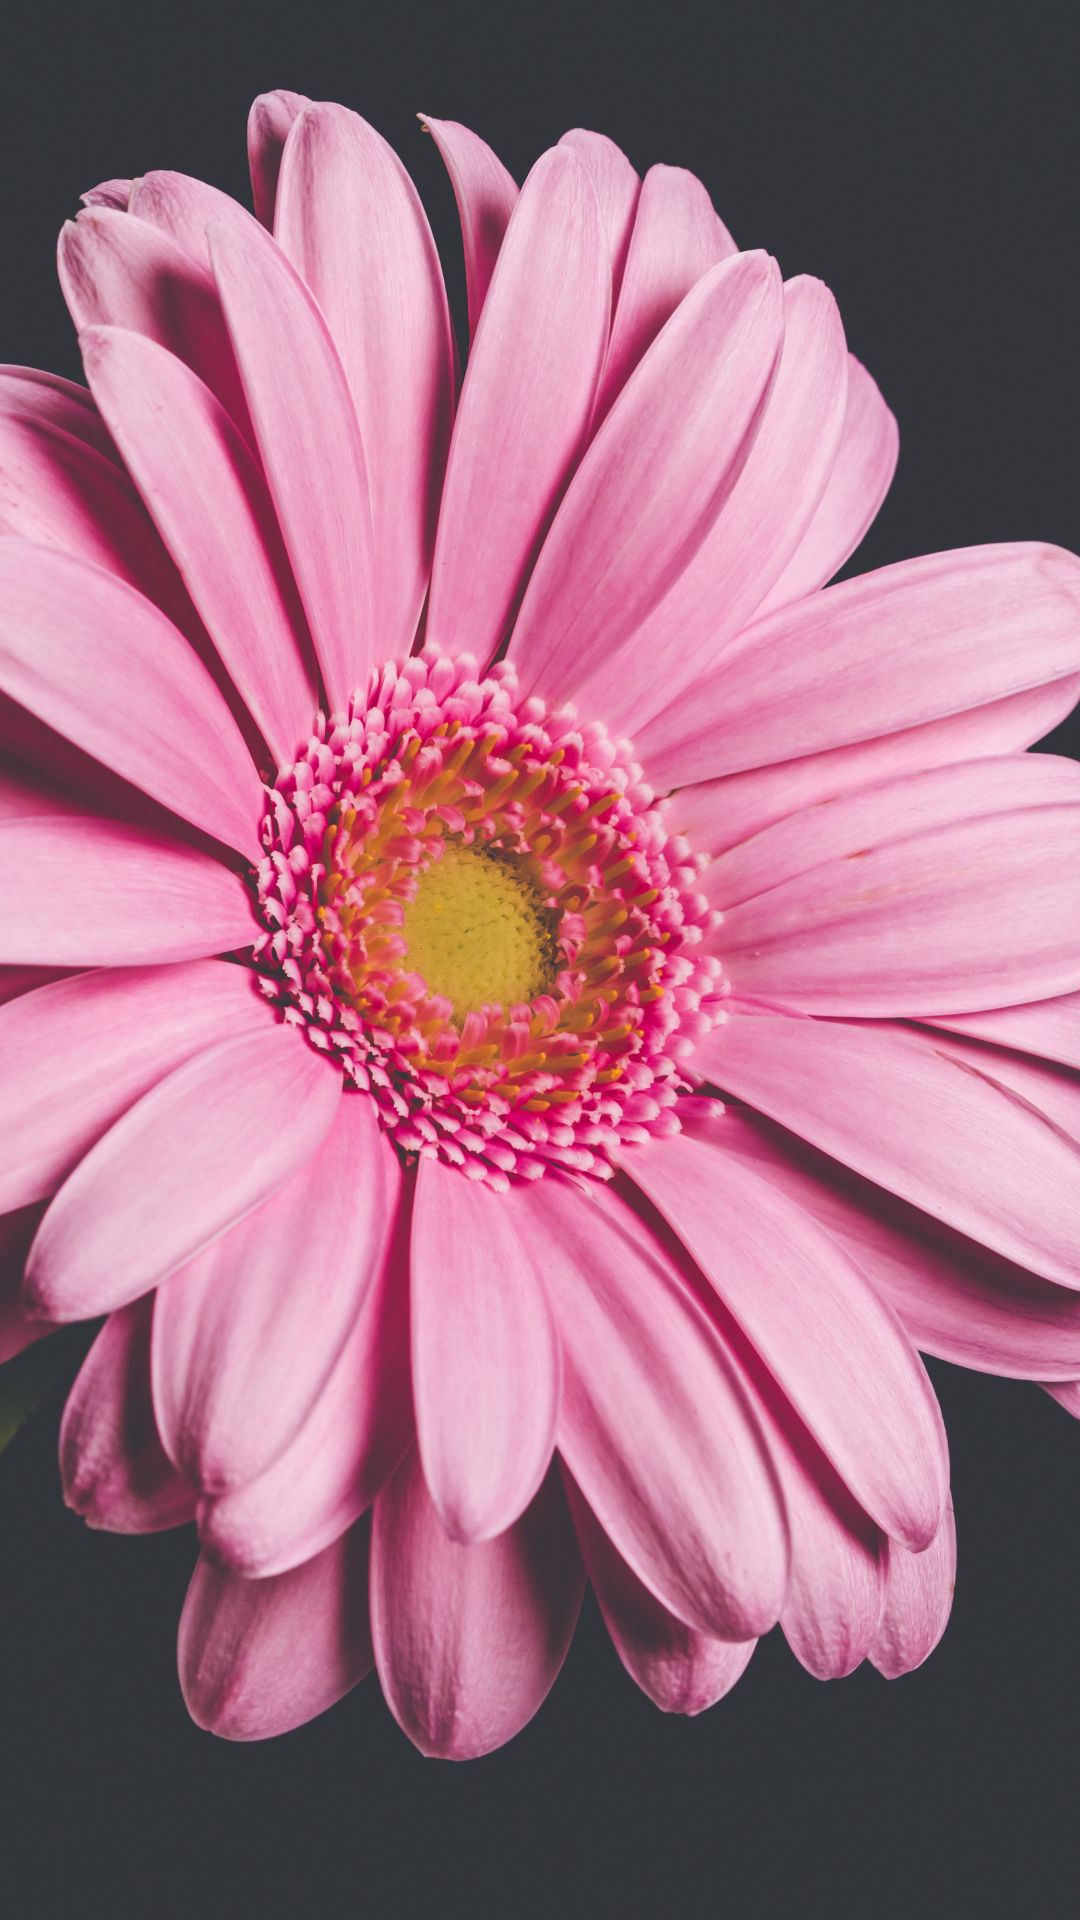 1080x1920 Pink Gerbera flower close up wallpaper Pink gerbera